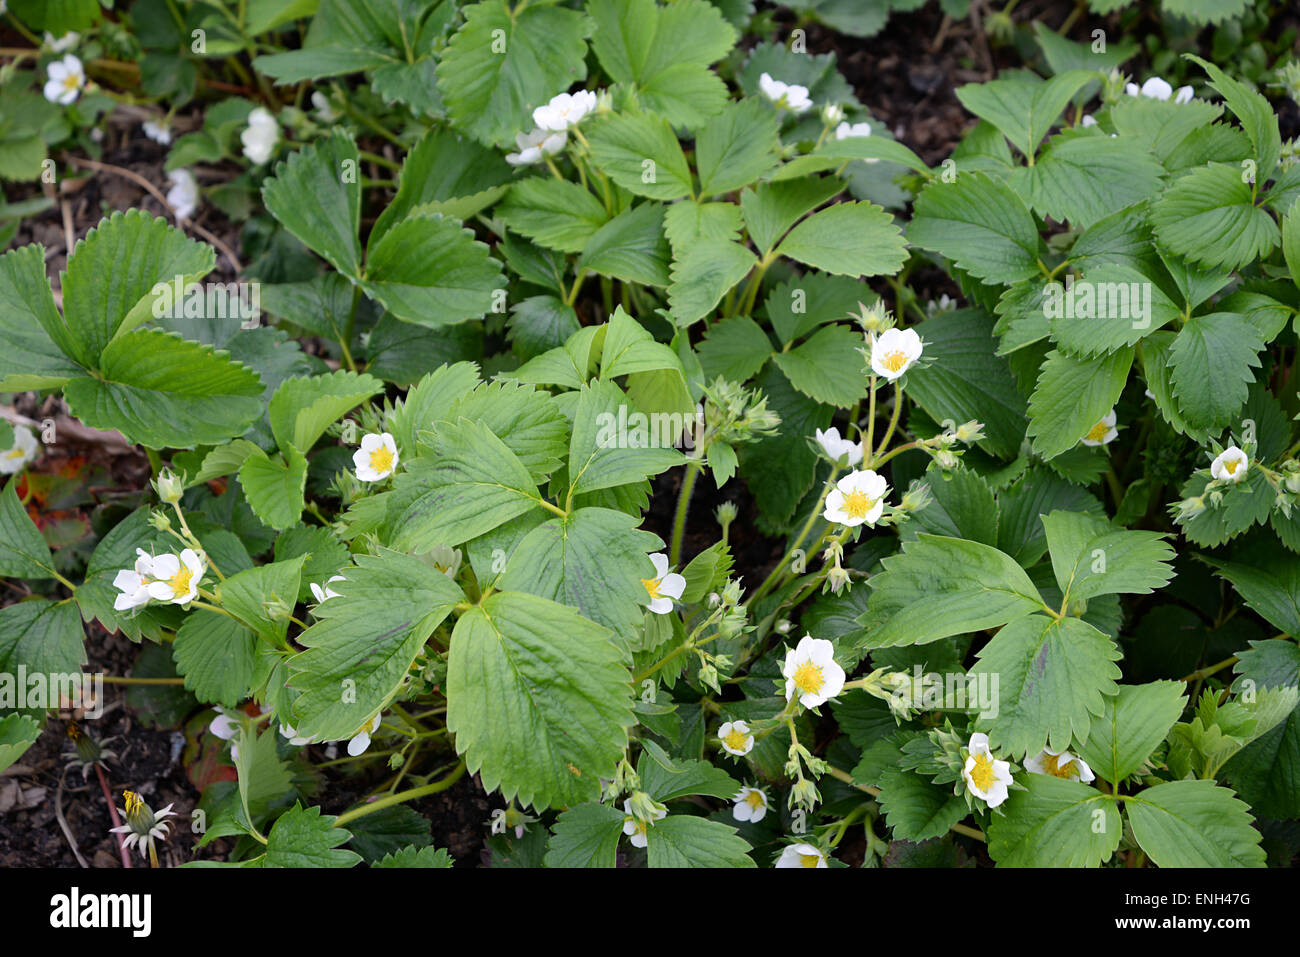 Strawberry plants with flowers grown in allotment gardens in Radlett,Hertfordshire. Stock Photo